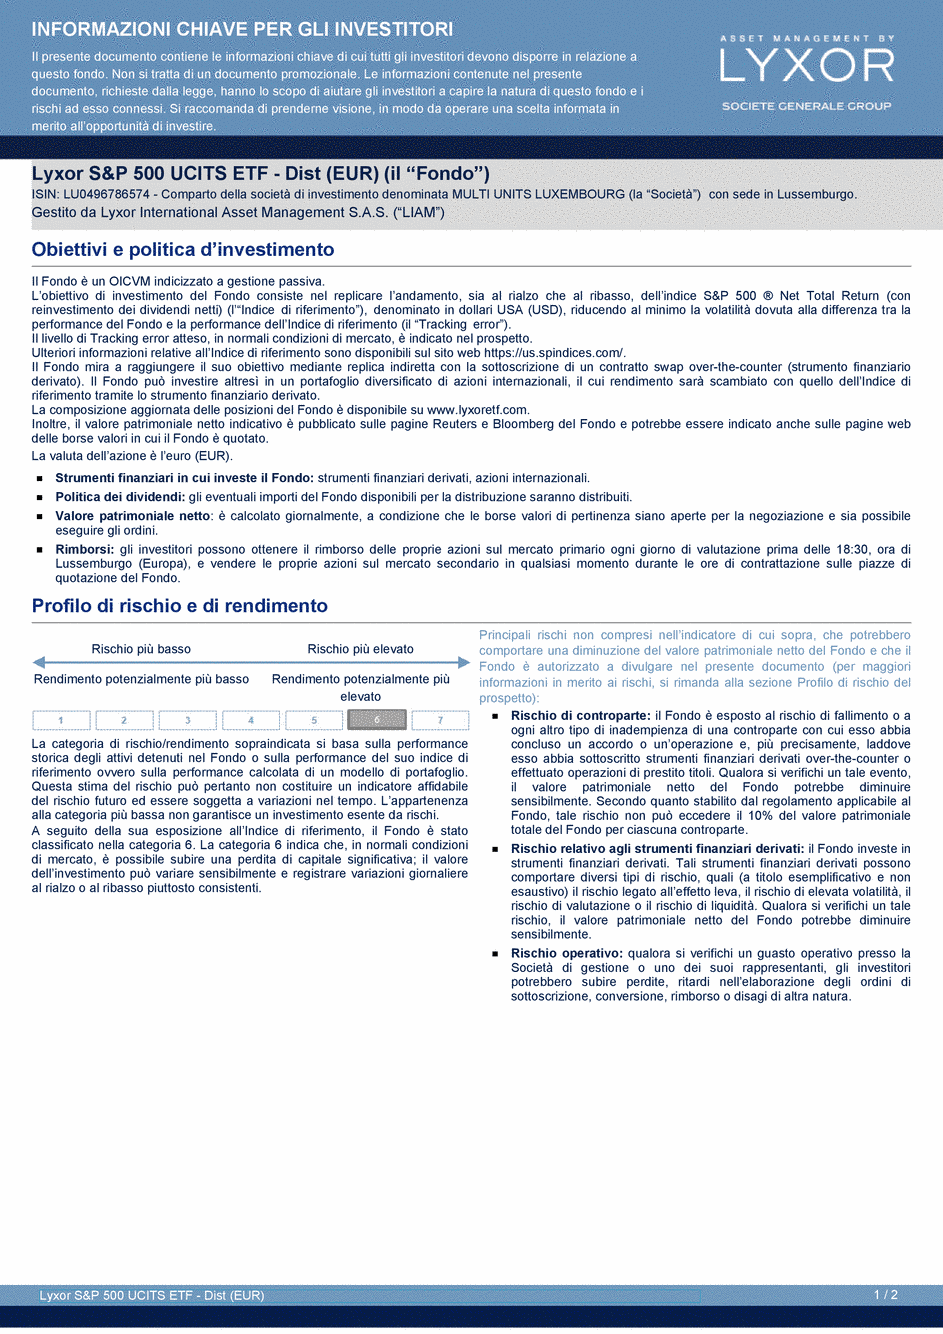 DICI Lyxor S&P 500 UCITS ETF - Dist (EUR) - 19/02/2021 - Italien